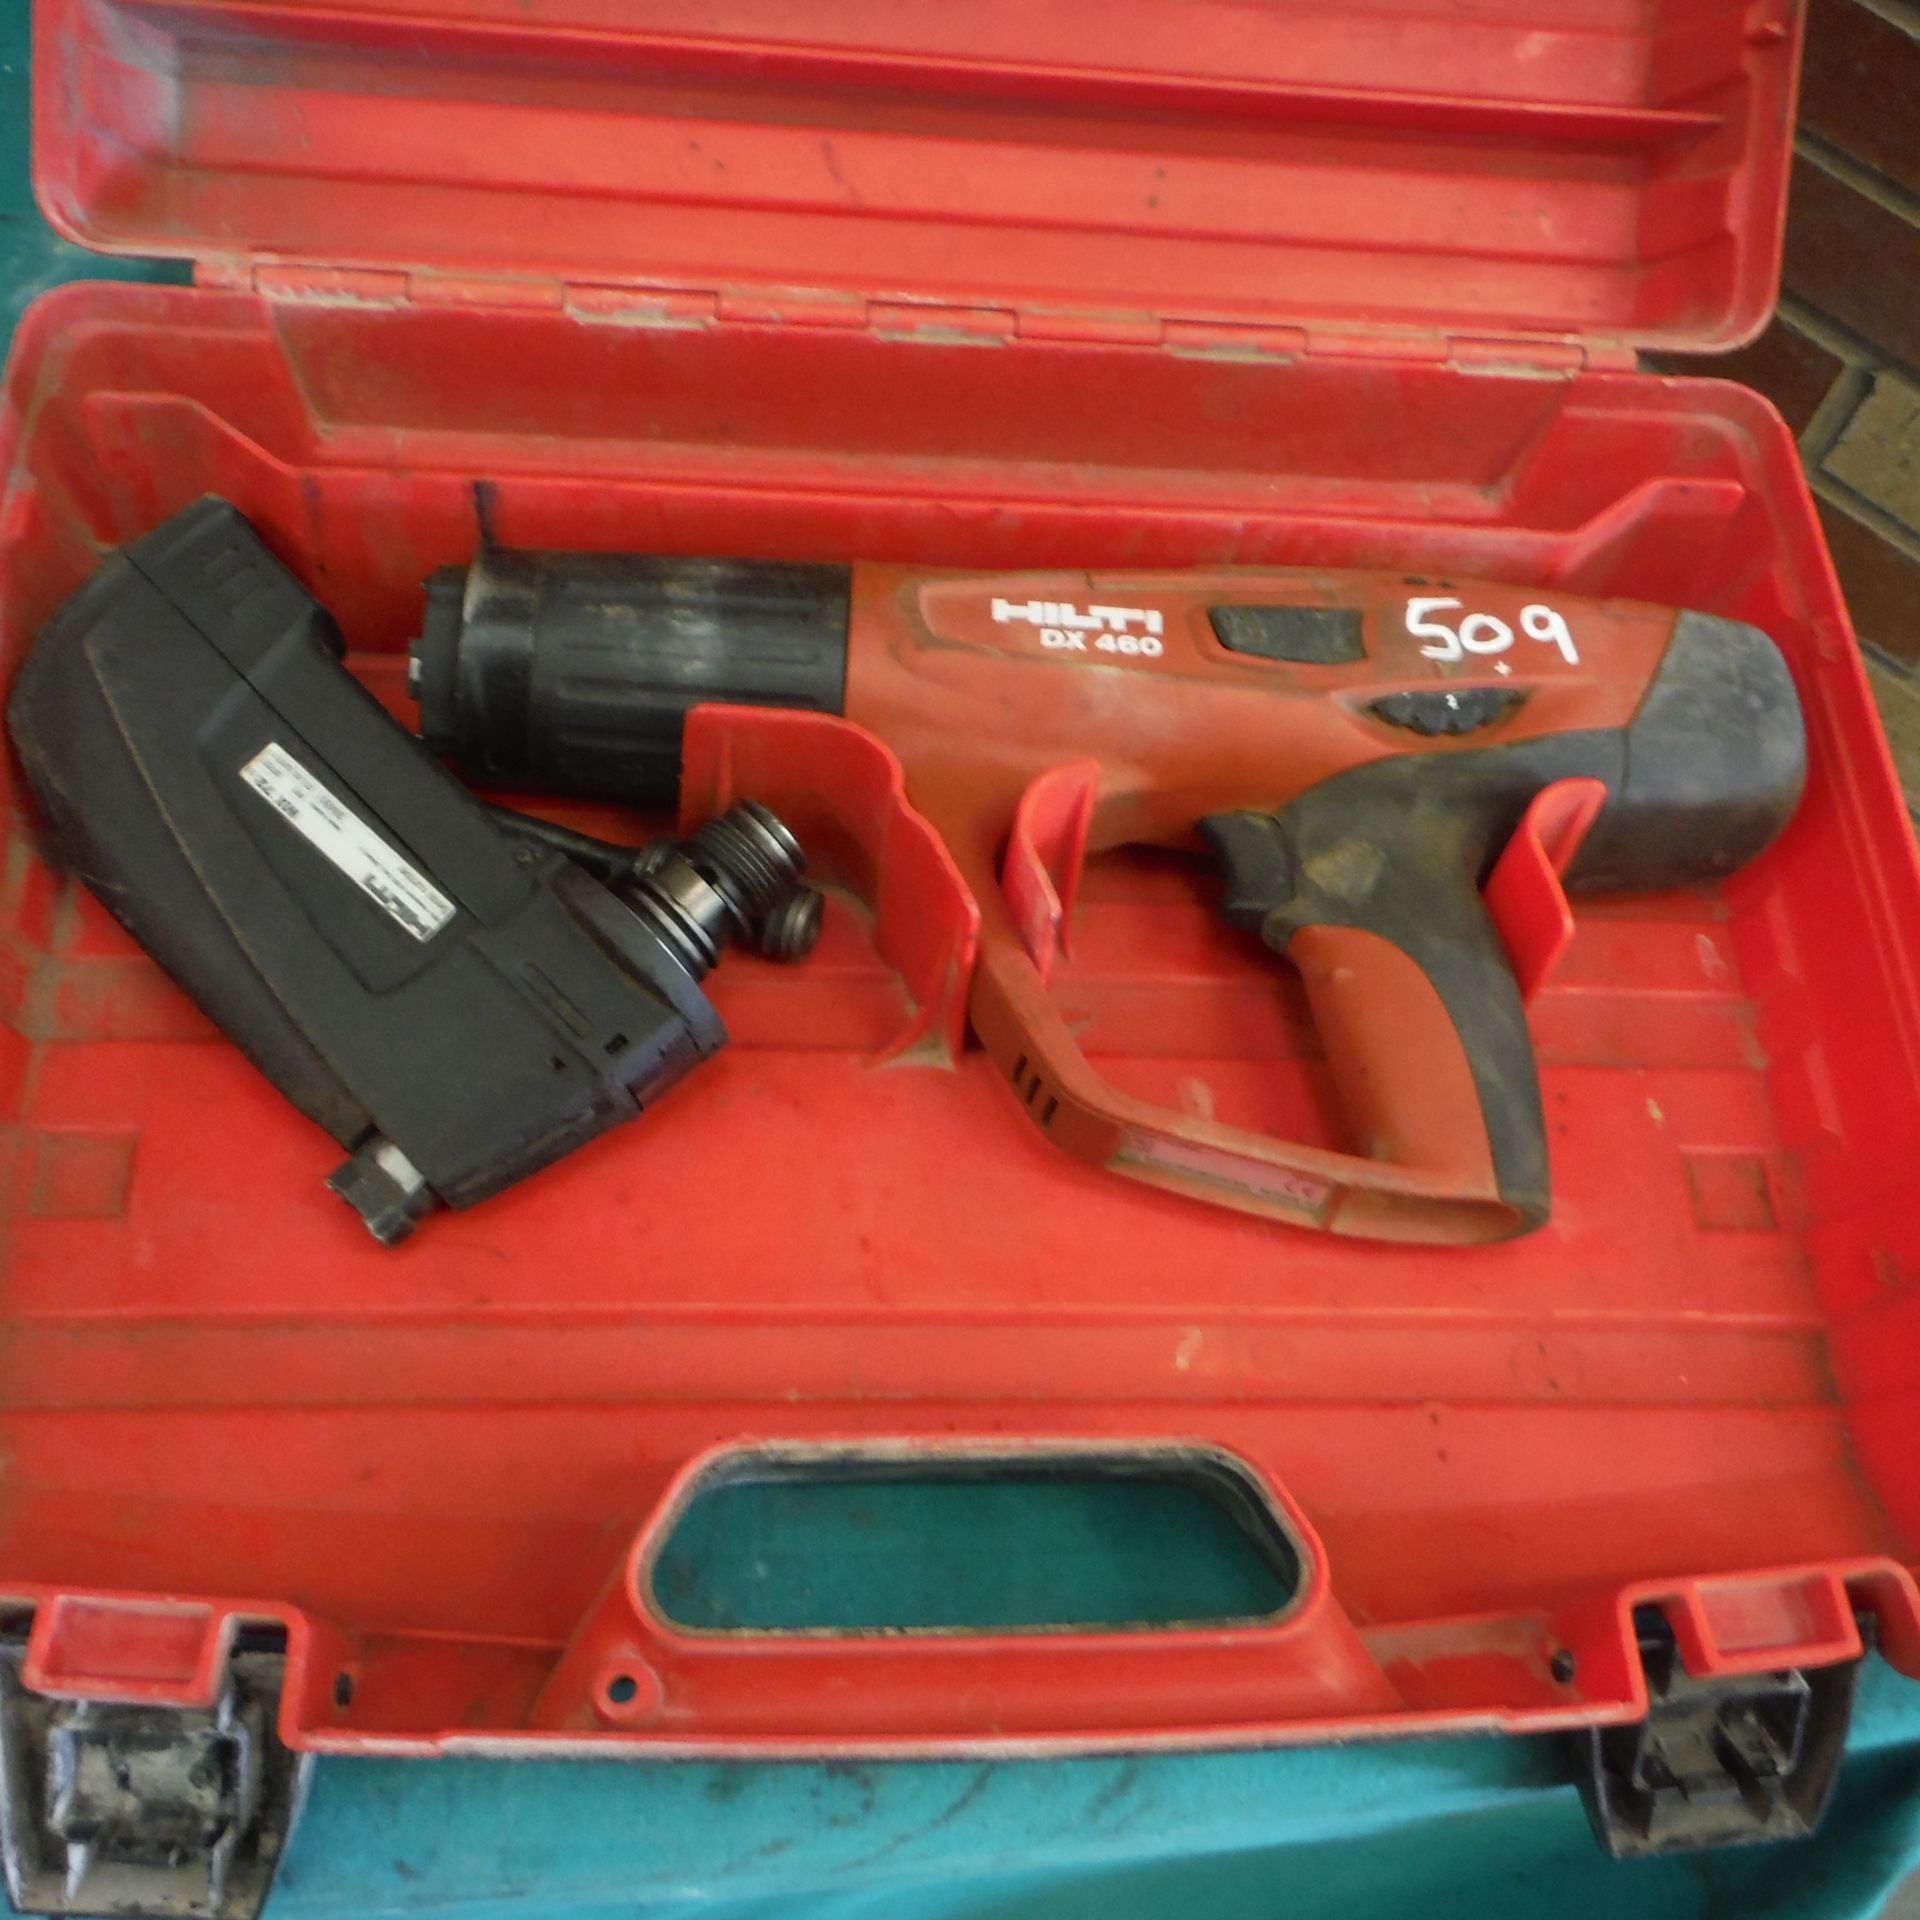 HILTI DX460 nail gun c/w case